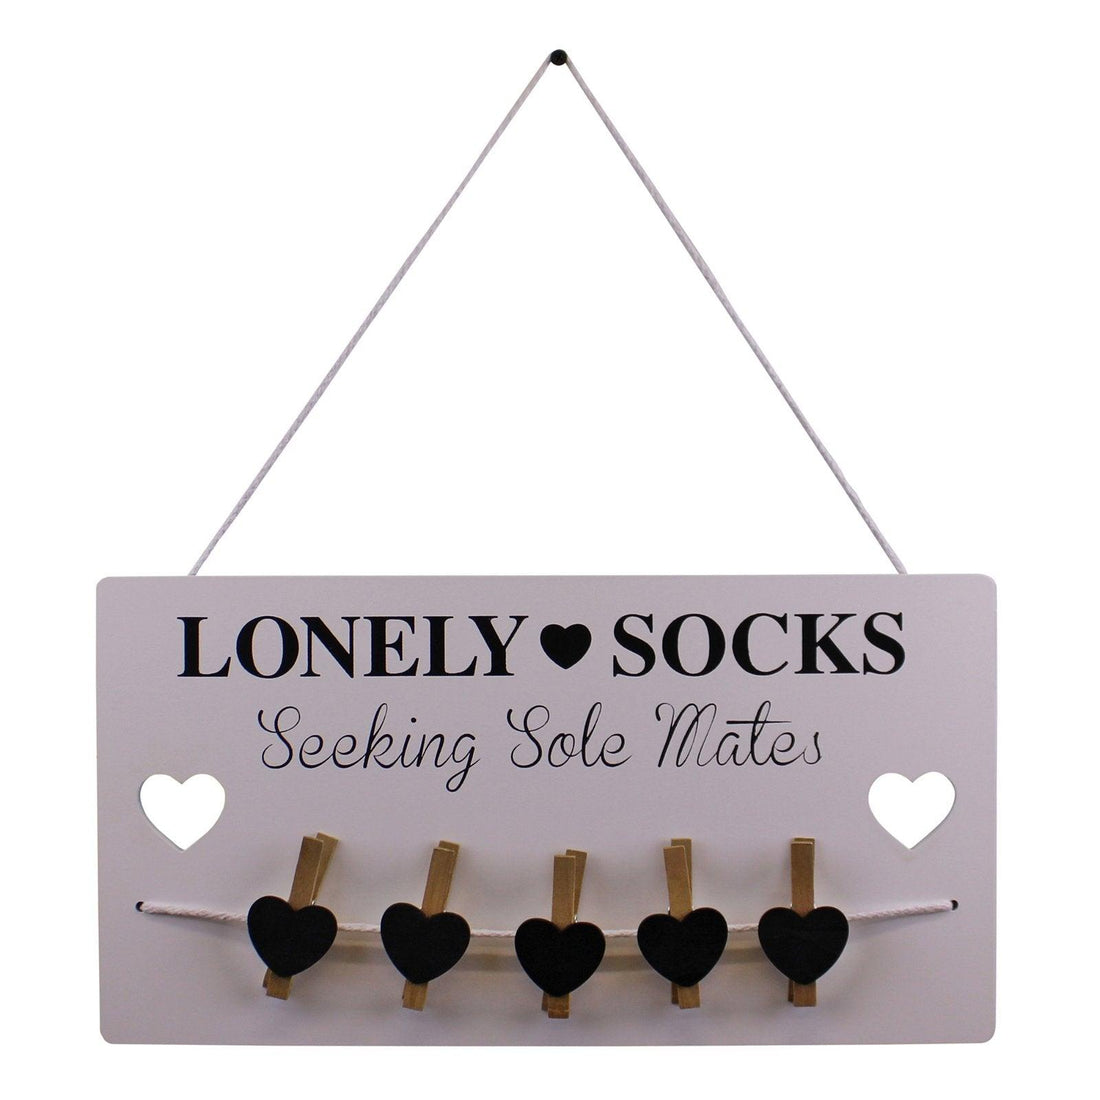 Hanging Lonely Sock Plaque 40x21cm - £18.99 - Blackboards, Memo Boards & Calendars 